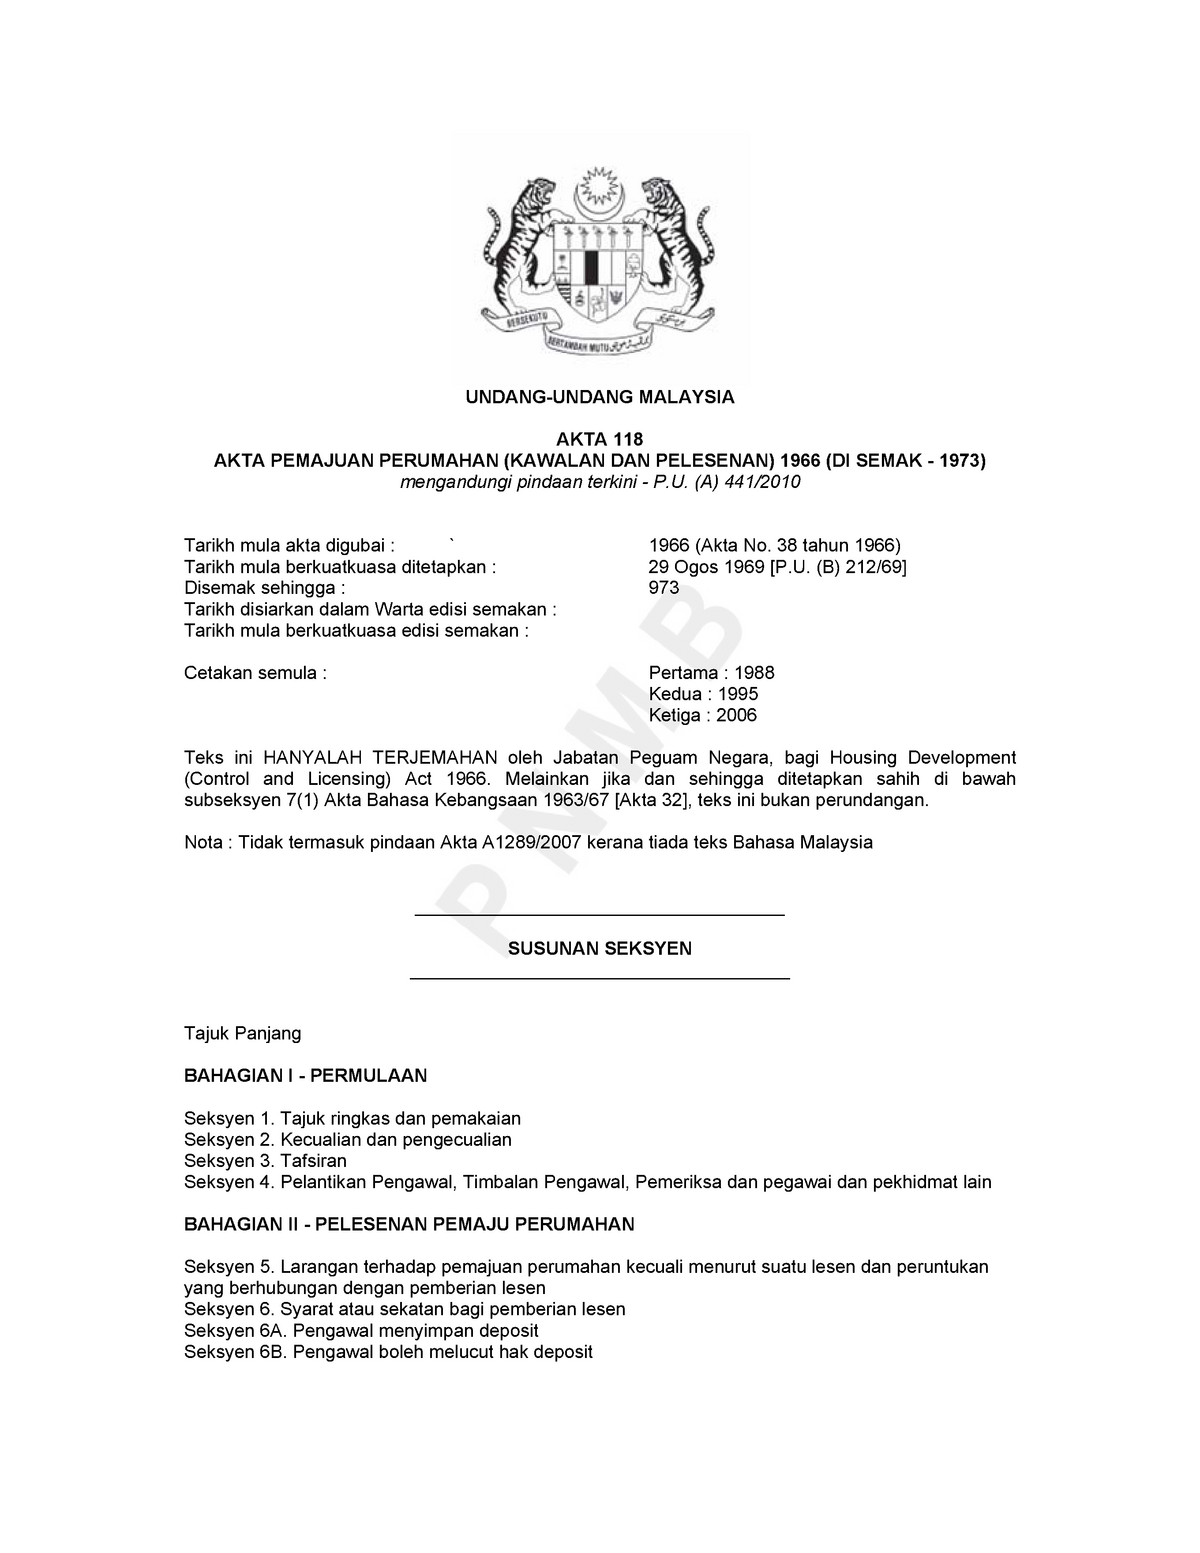 Akta118y1966bm Nthg Undang Undang Malaysia Akta 118 Akta Pemajuan Perumahan Studocu